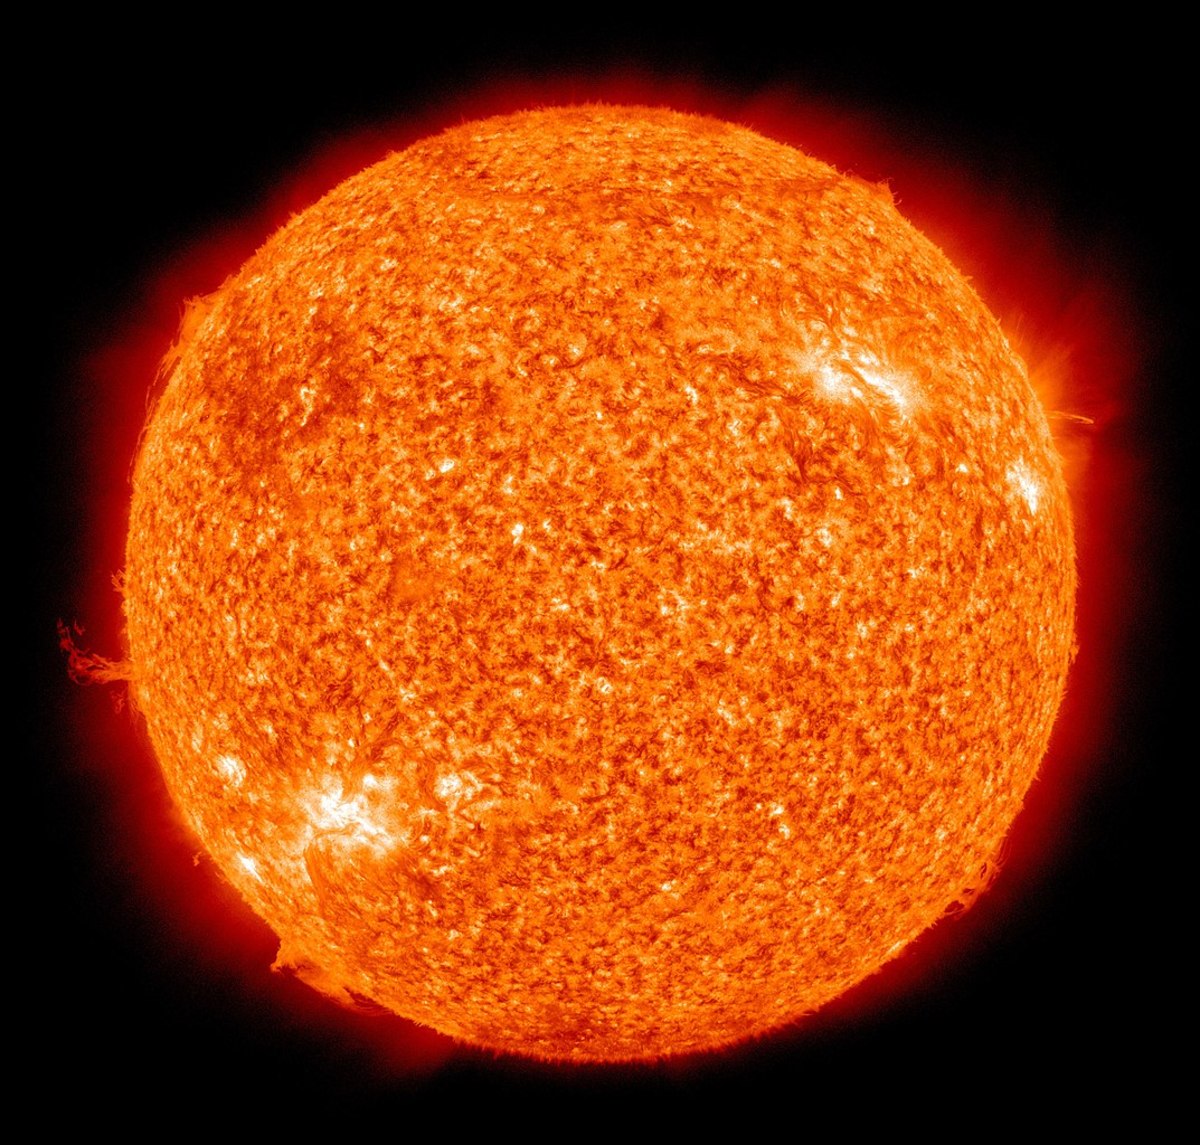 The Sun is a yellow dwarf star.